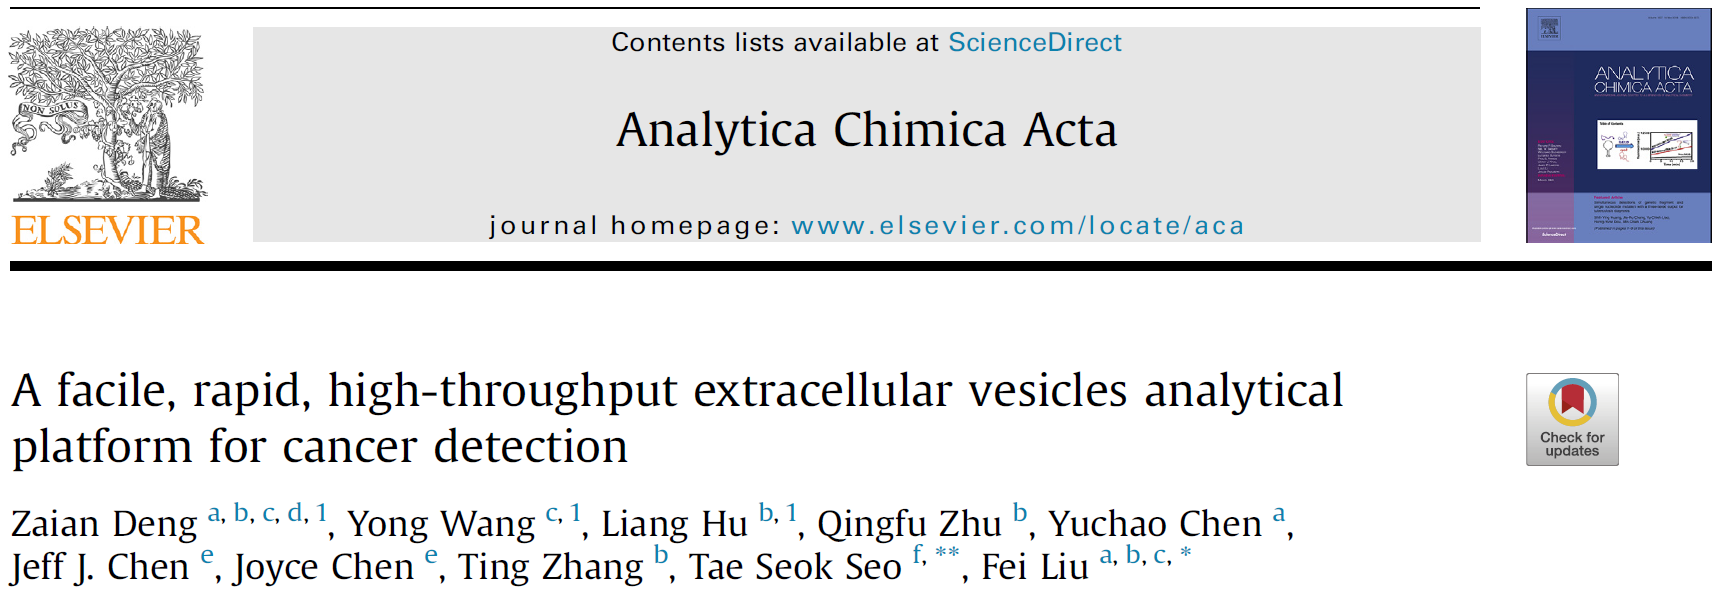 Zaian Deng, Yong Wang , Liang Hu, et al. A facile, rapid, high-throughput extracellular vesicles analytical platform for cancer detection. Analytica Chimica Acta 1138 (2020) 132e140.